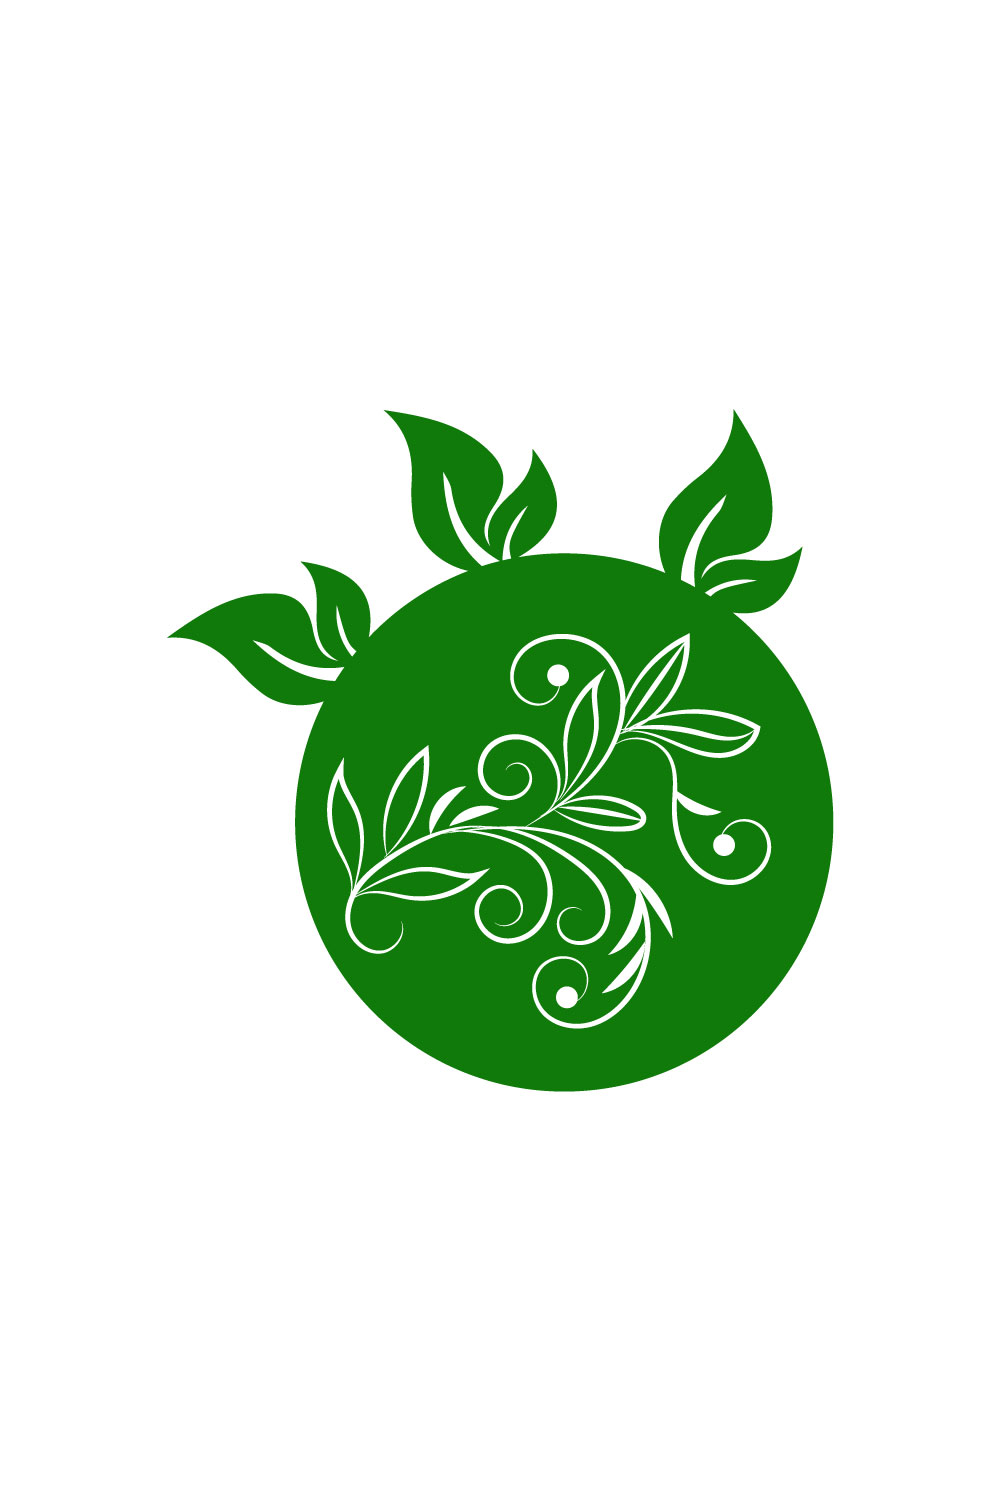 Free green vegetables logo pinterest preview image.